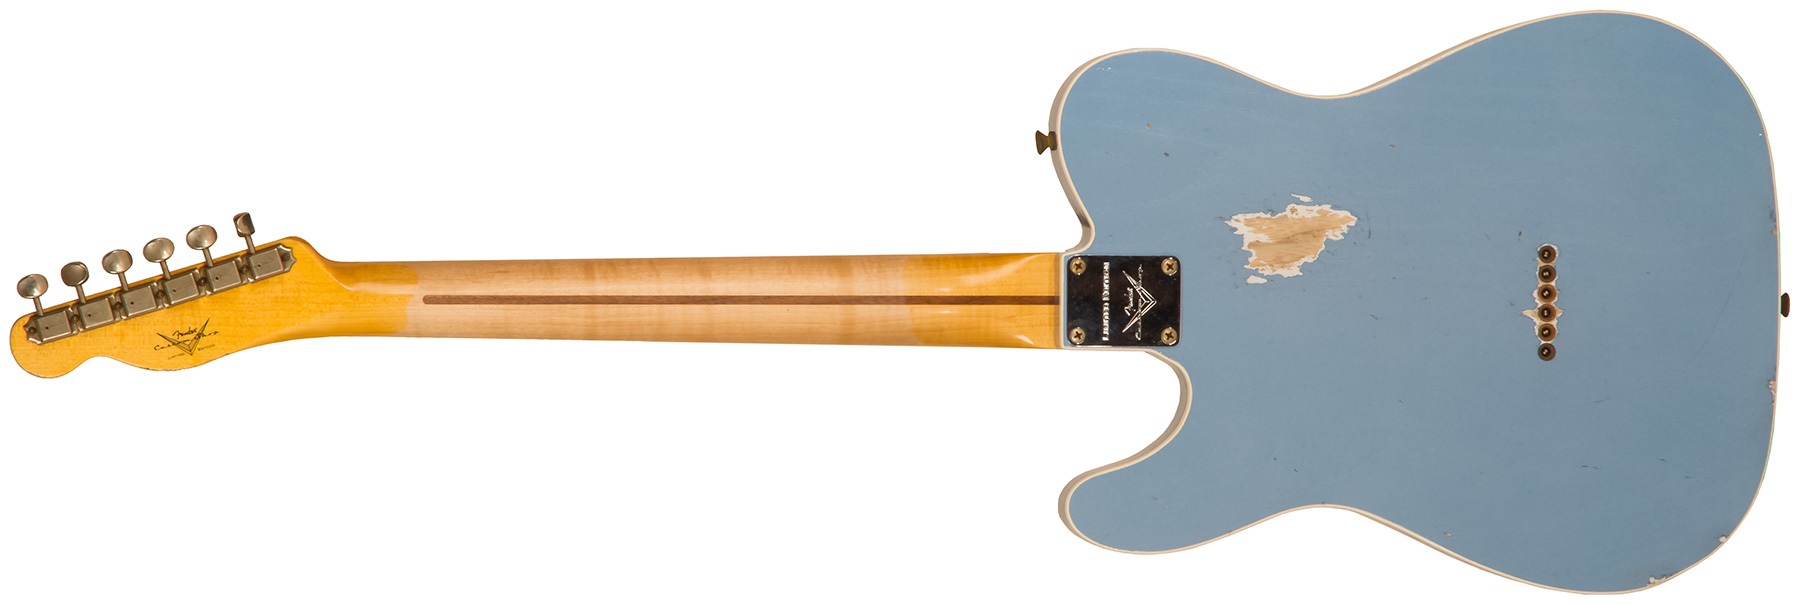 Fender Custom Shop Tele Custom Tomatillo 2s Ht Mn #r110879 - Relic Lake Placid Blue - E-Gitarre in Teleform - Variation 1